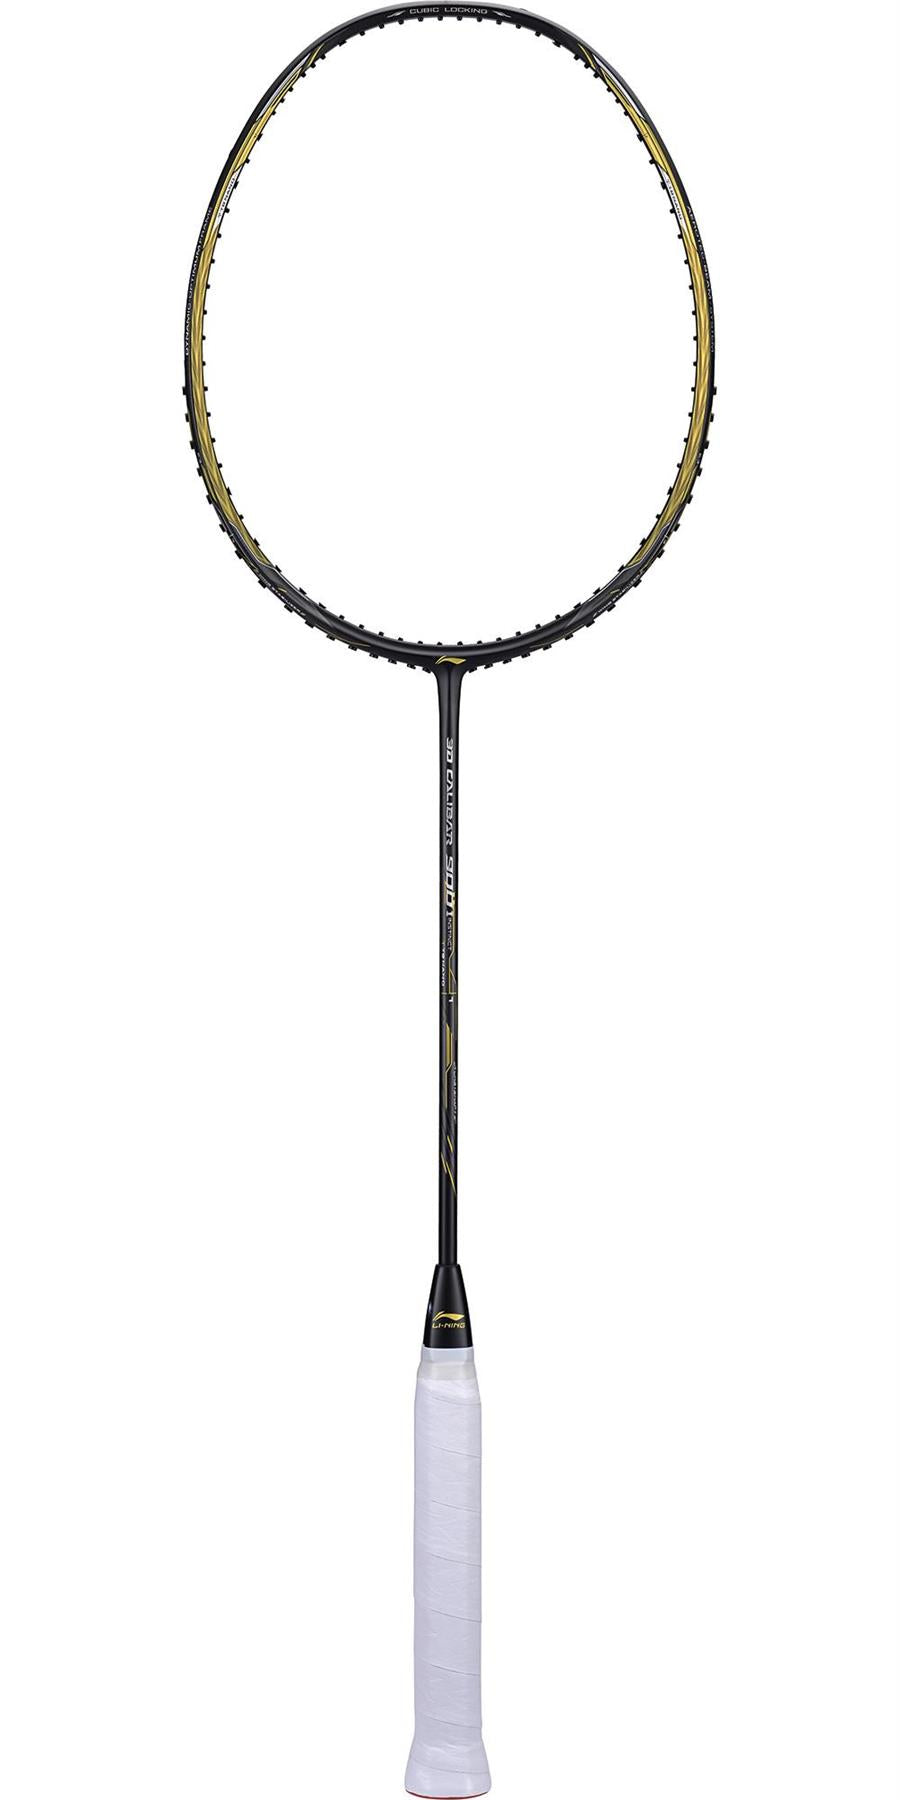 Li-Ning 3D Calibar 900 Instinct Badminton Racket  - Black Gold